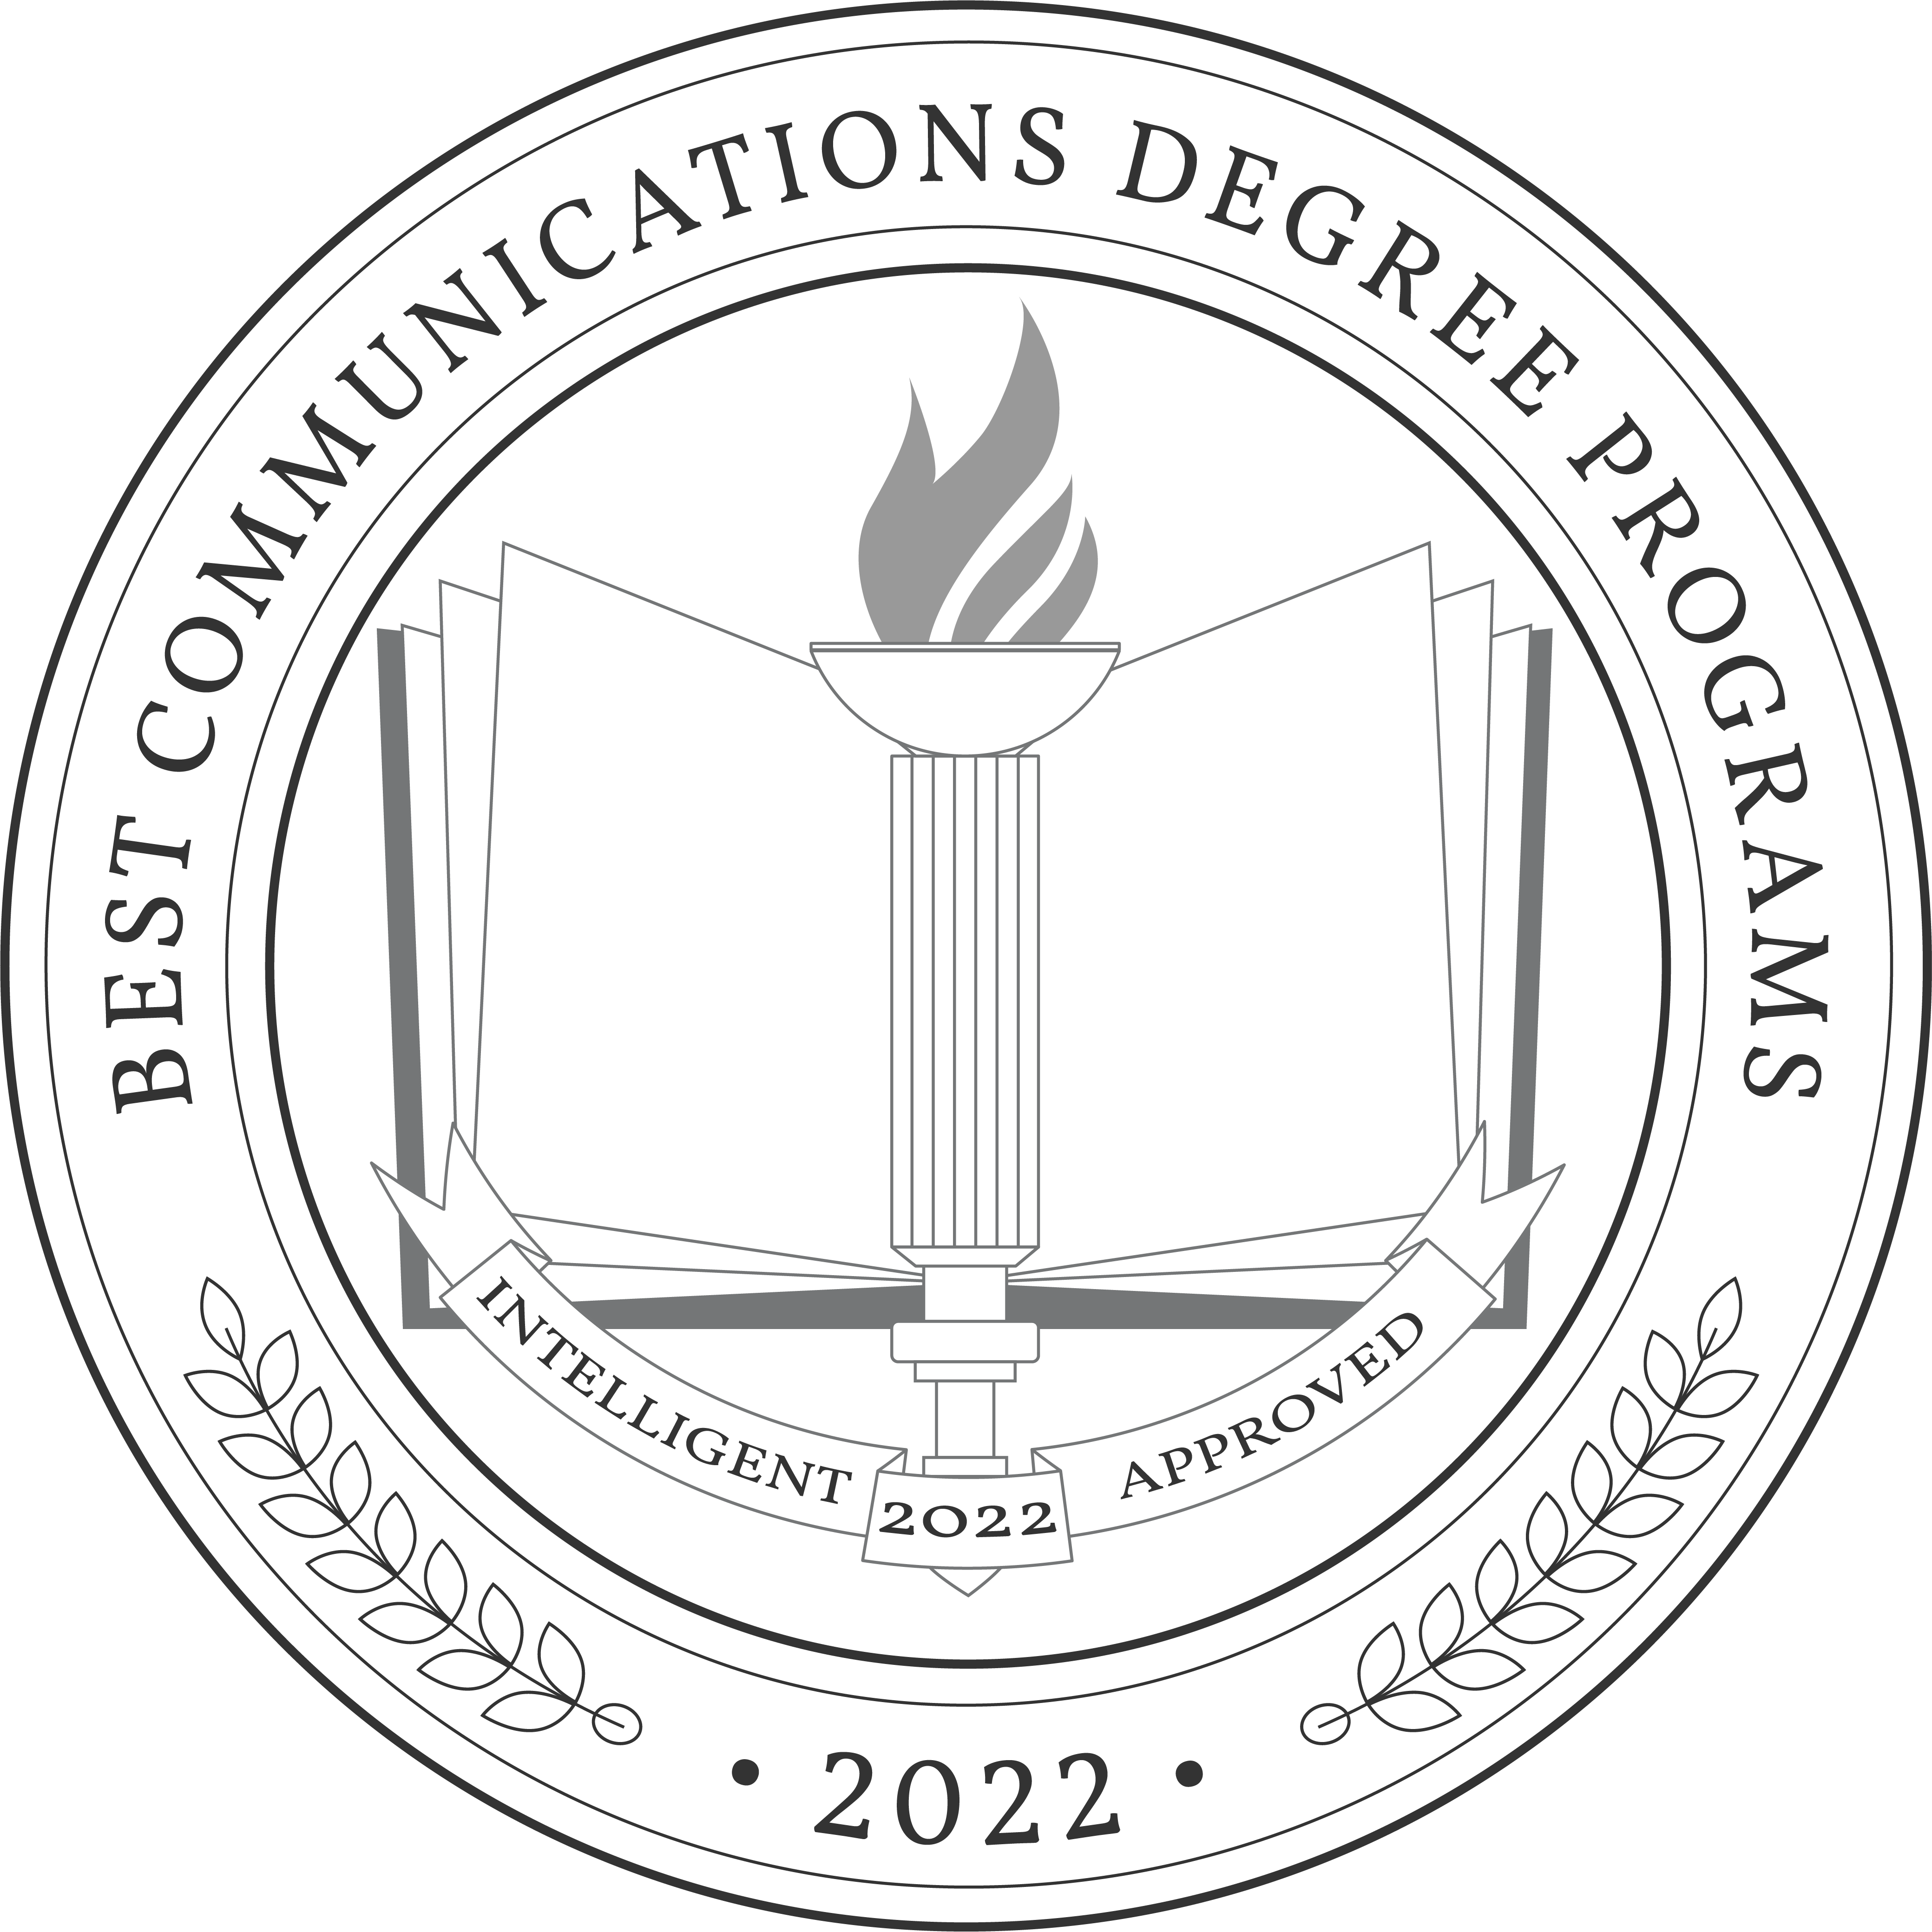 Best Online Communications Degree Programs